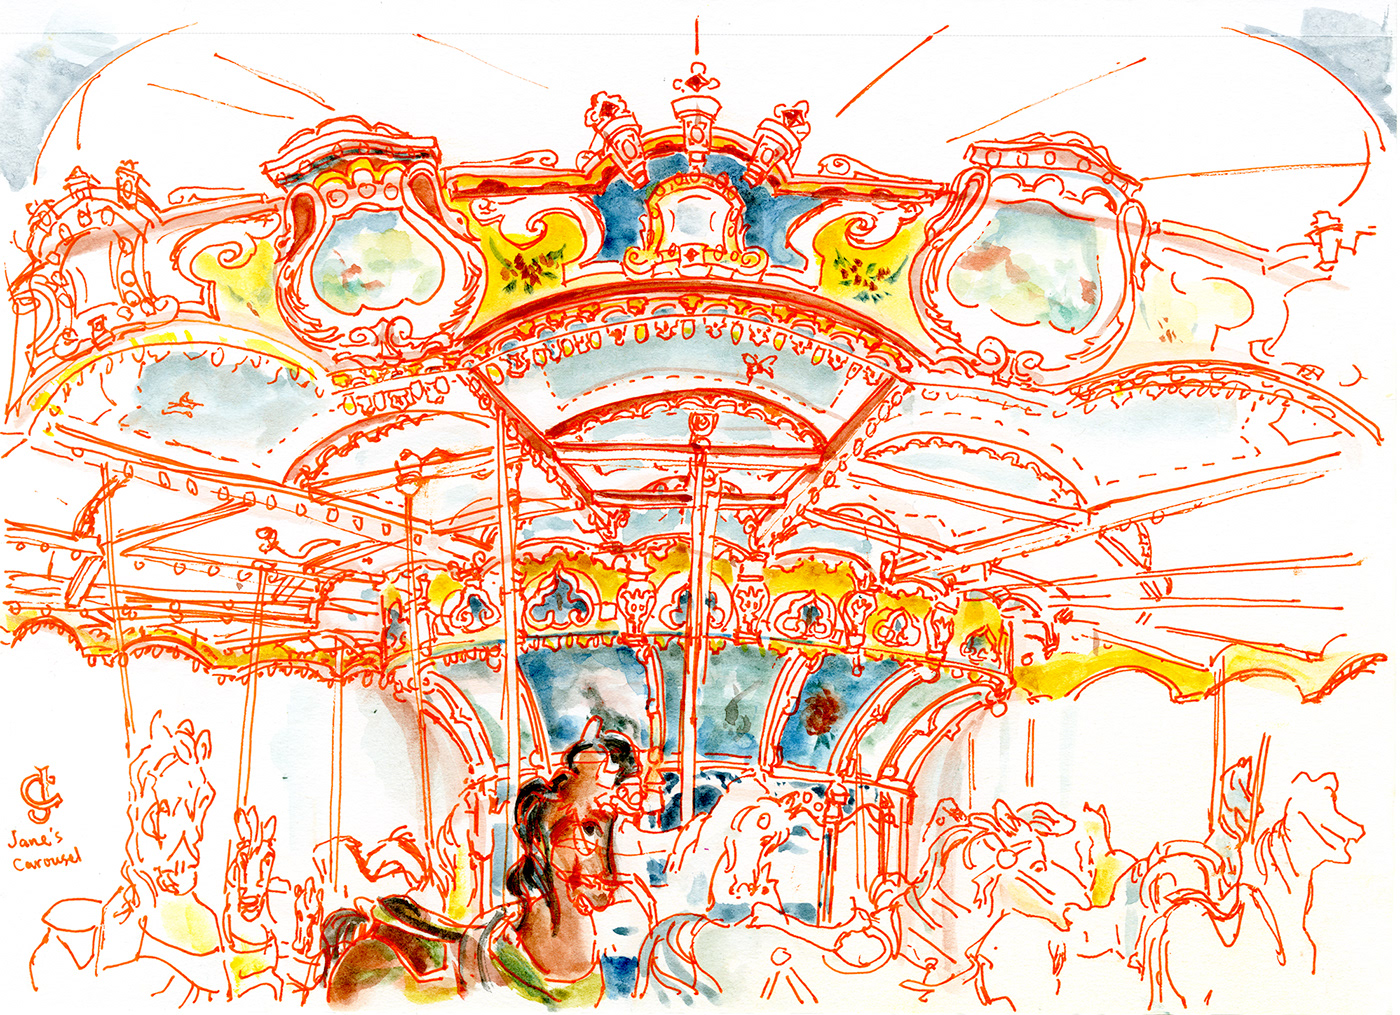 carousel New York Drawing 